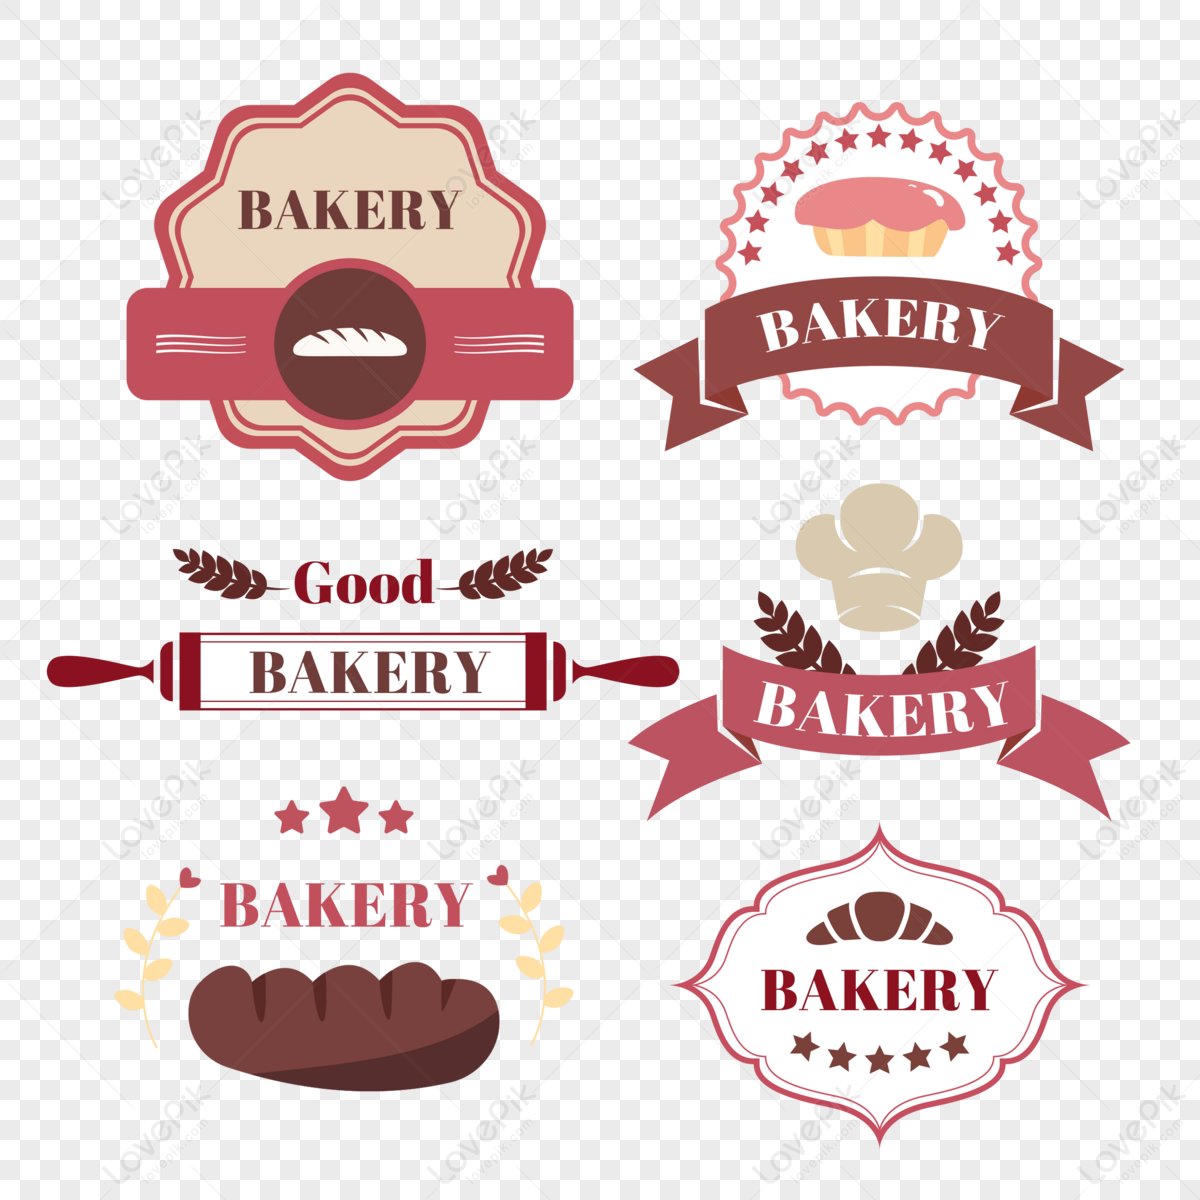 Bakery Logo Animation by tubik on Dribbble